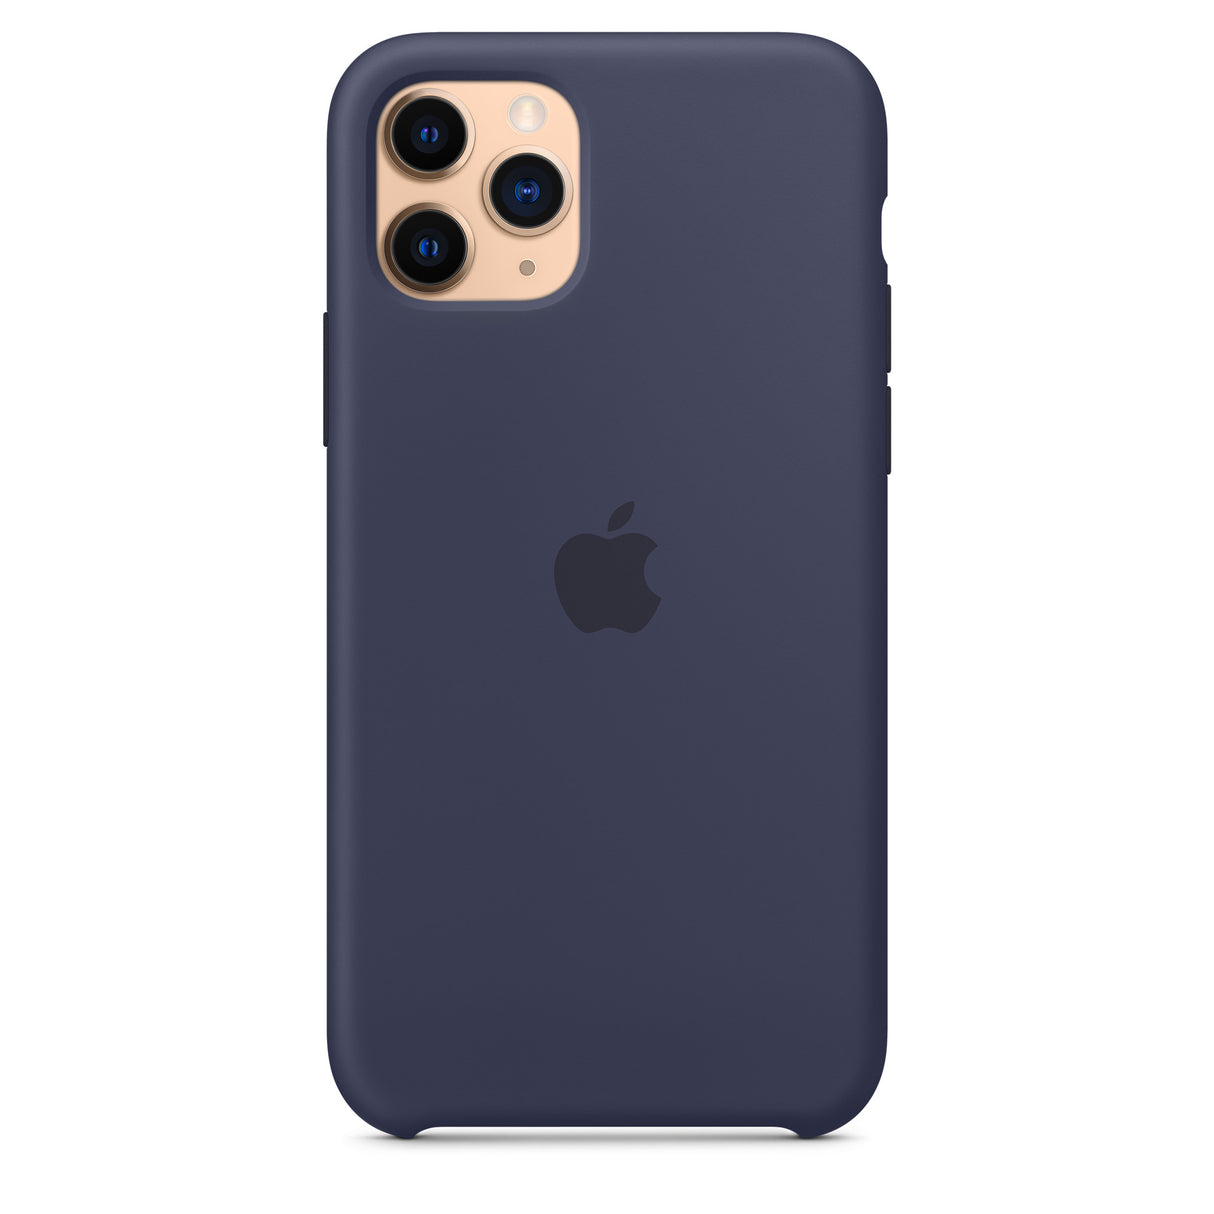 iPhone 11 Pro Silicone Case - Midnight Blue OB